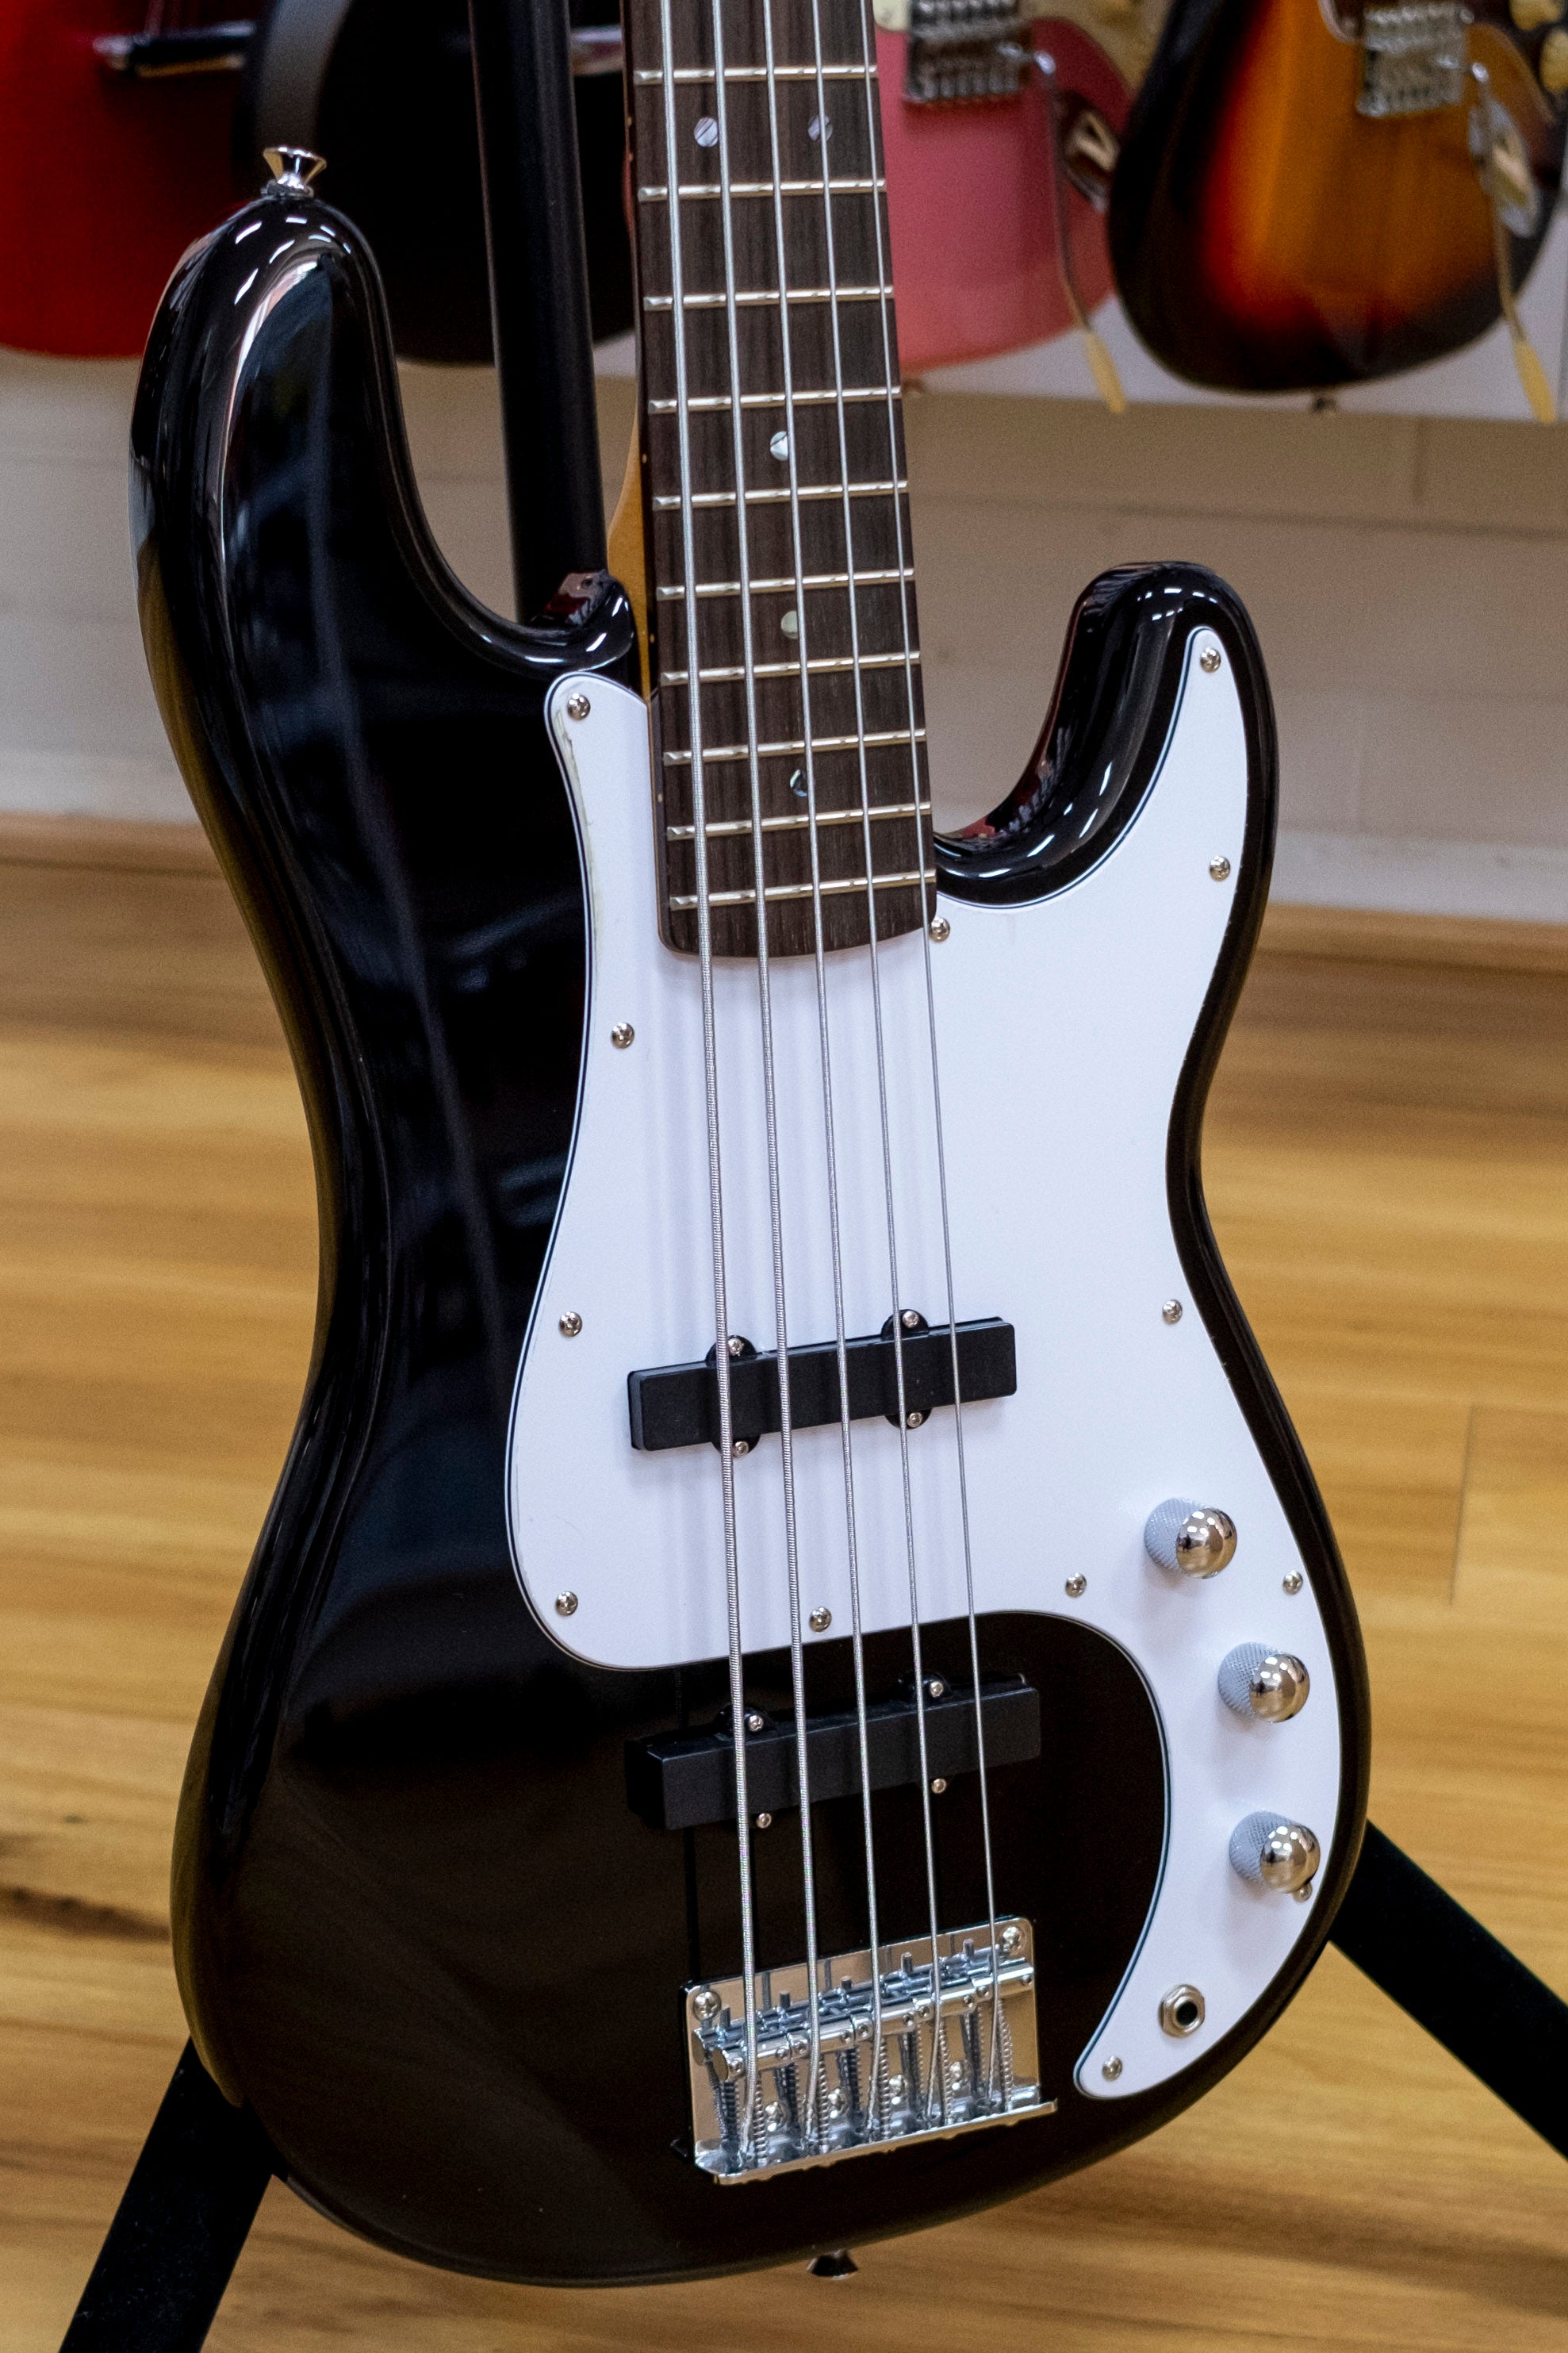 SX VTG Series 5-String Bass Guitar with Gig Bag (Black)